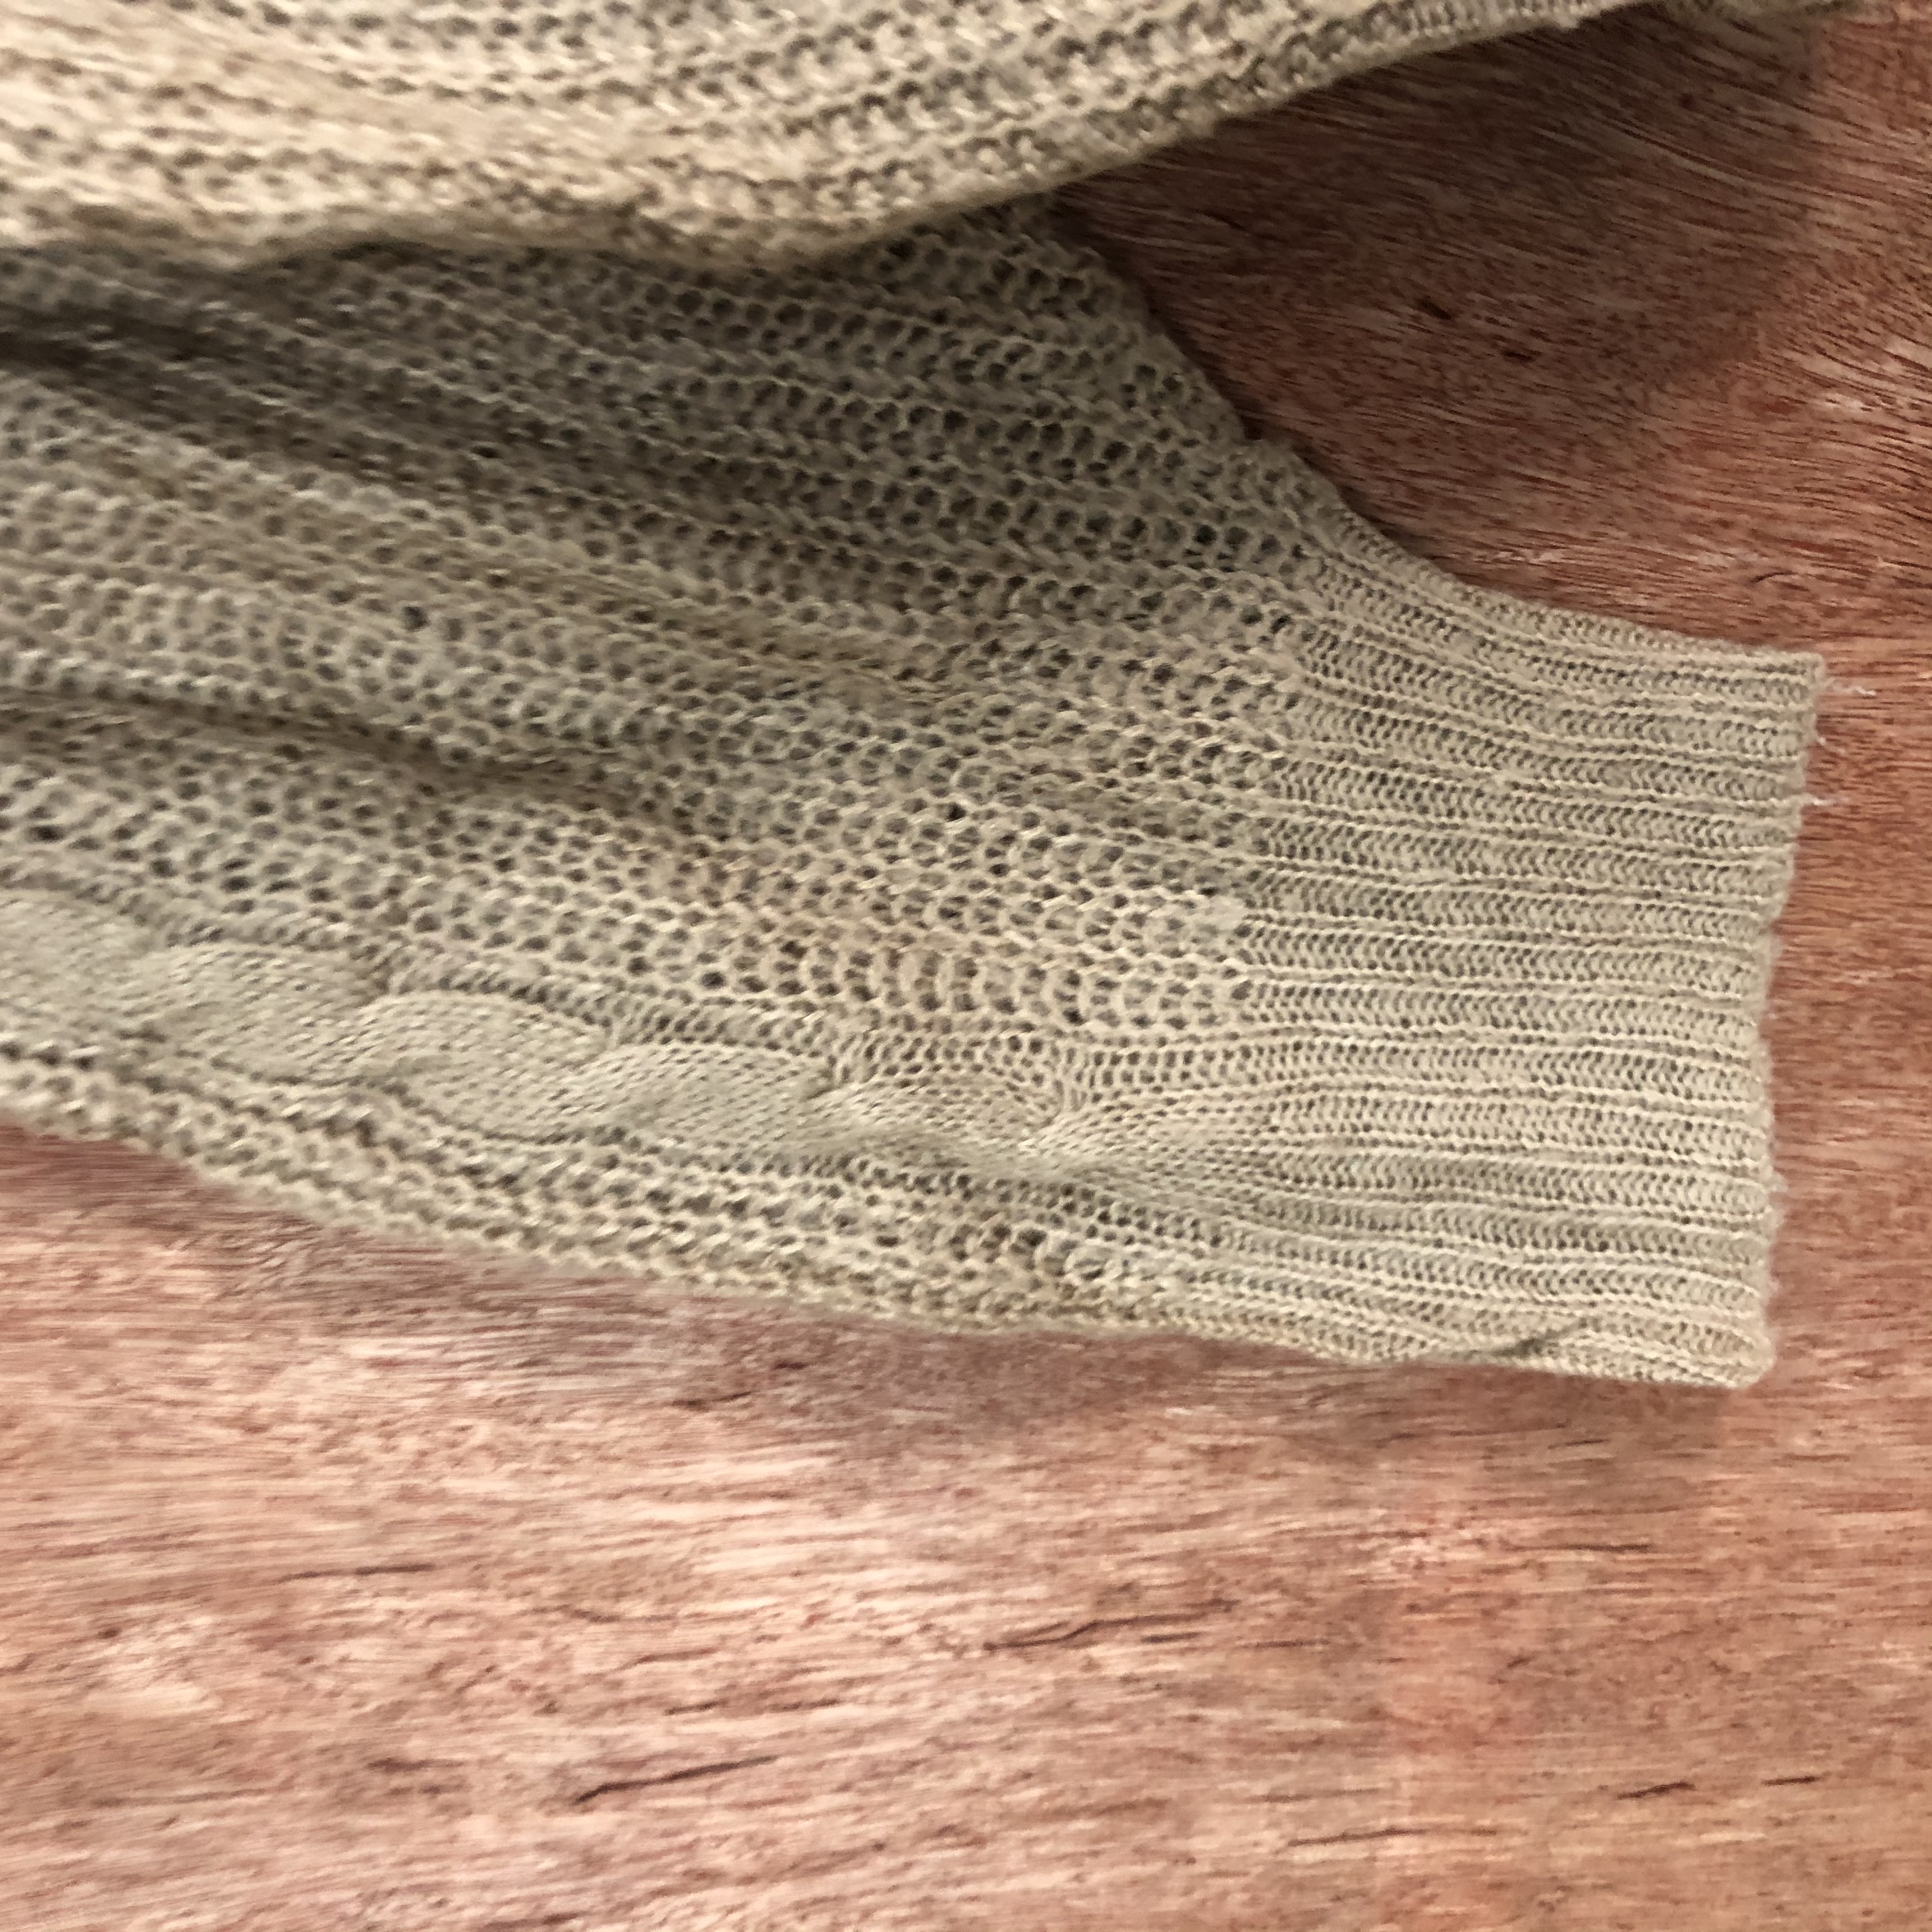 Homespun Knitwear - Glory Brown Faded Knitwear #c545 - 6